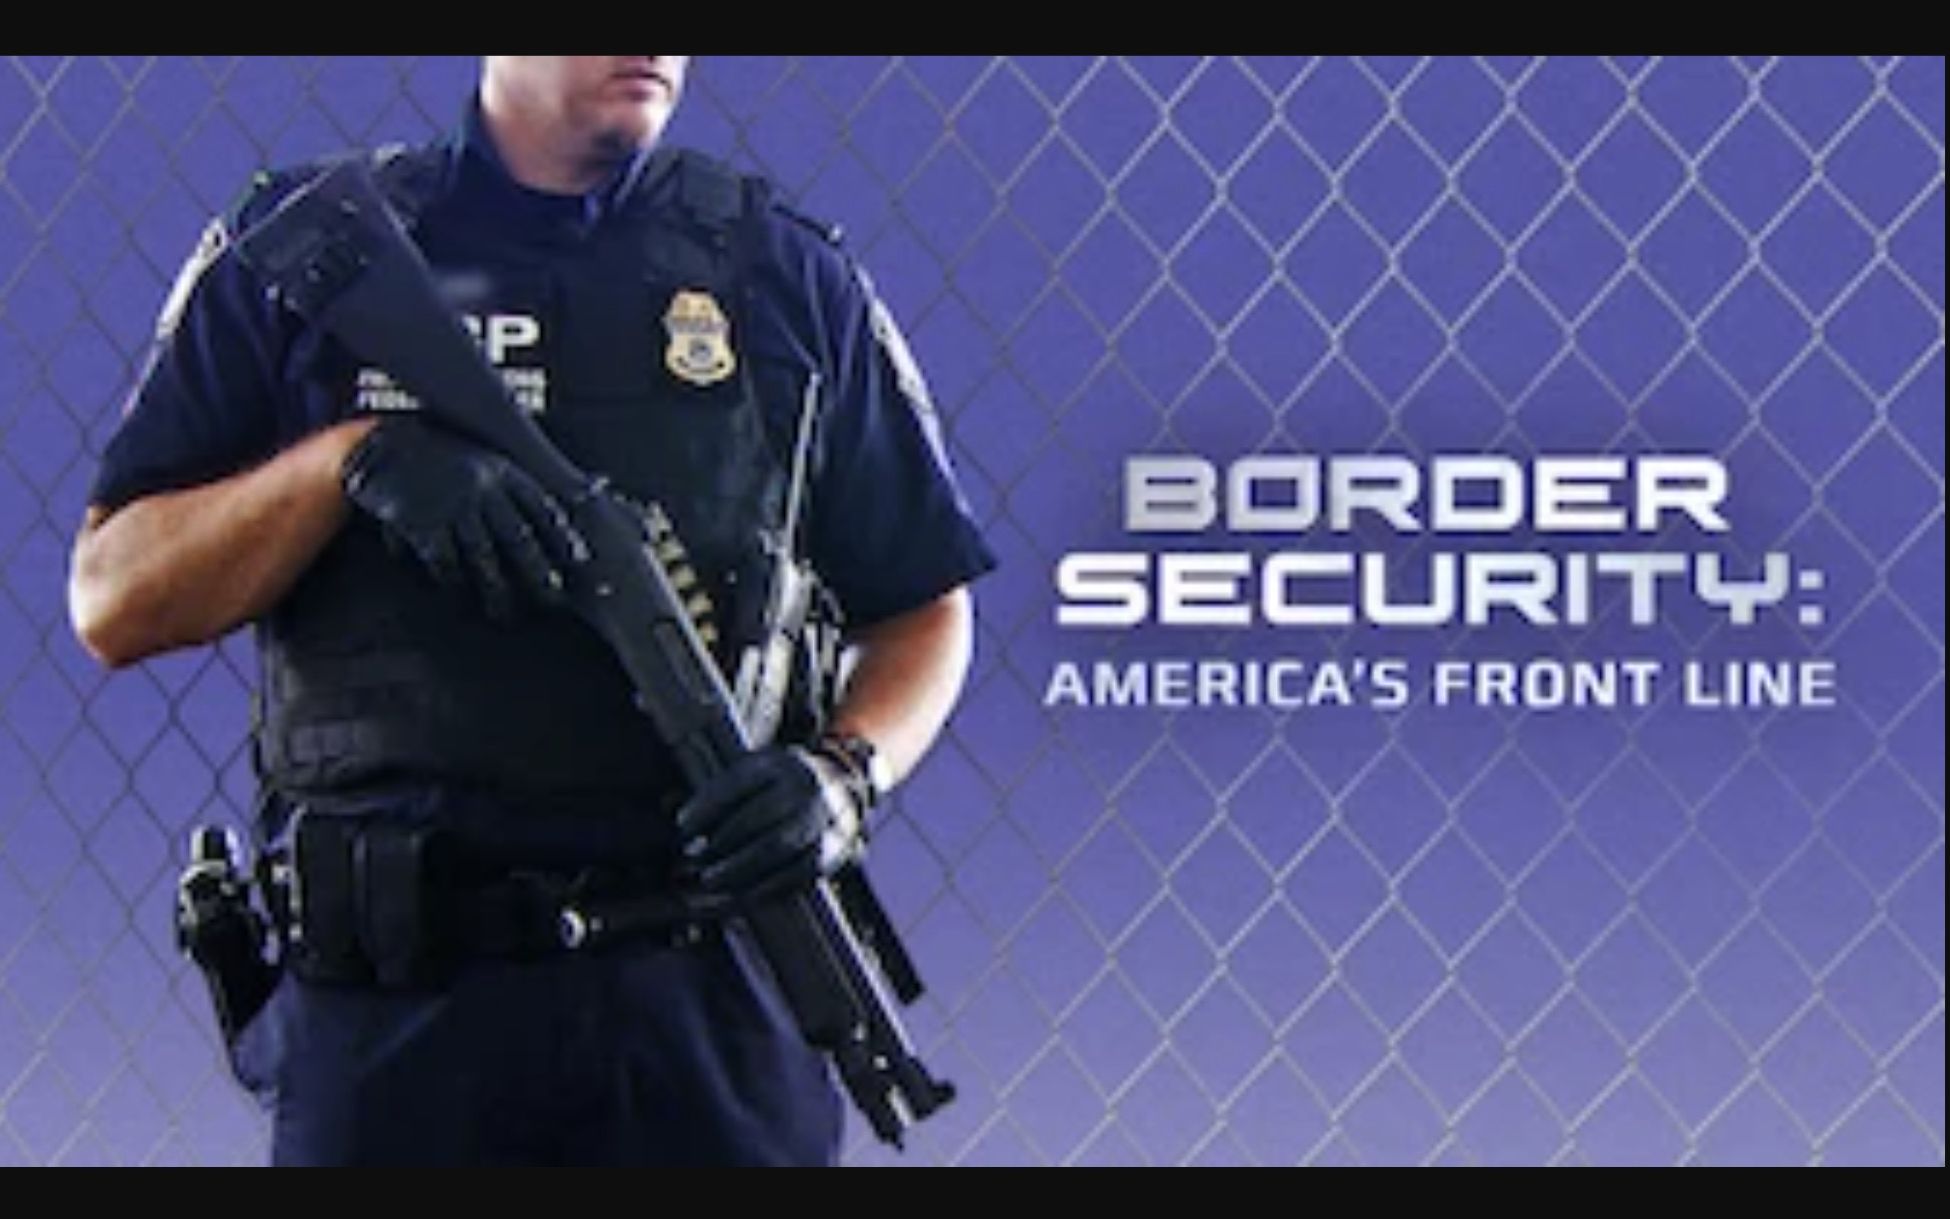 【Netflix】边境安全：美国前线 第1季全20集 1080P英语英字 Border Security America's Front Line